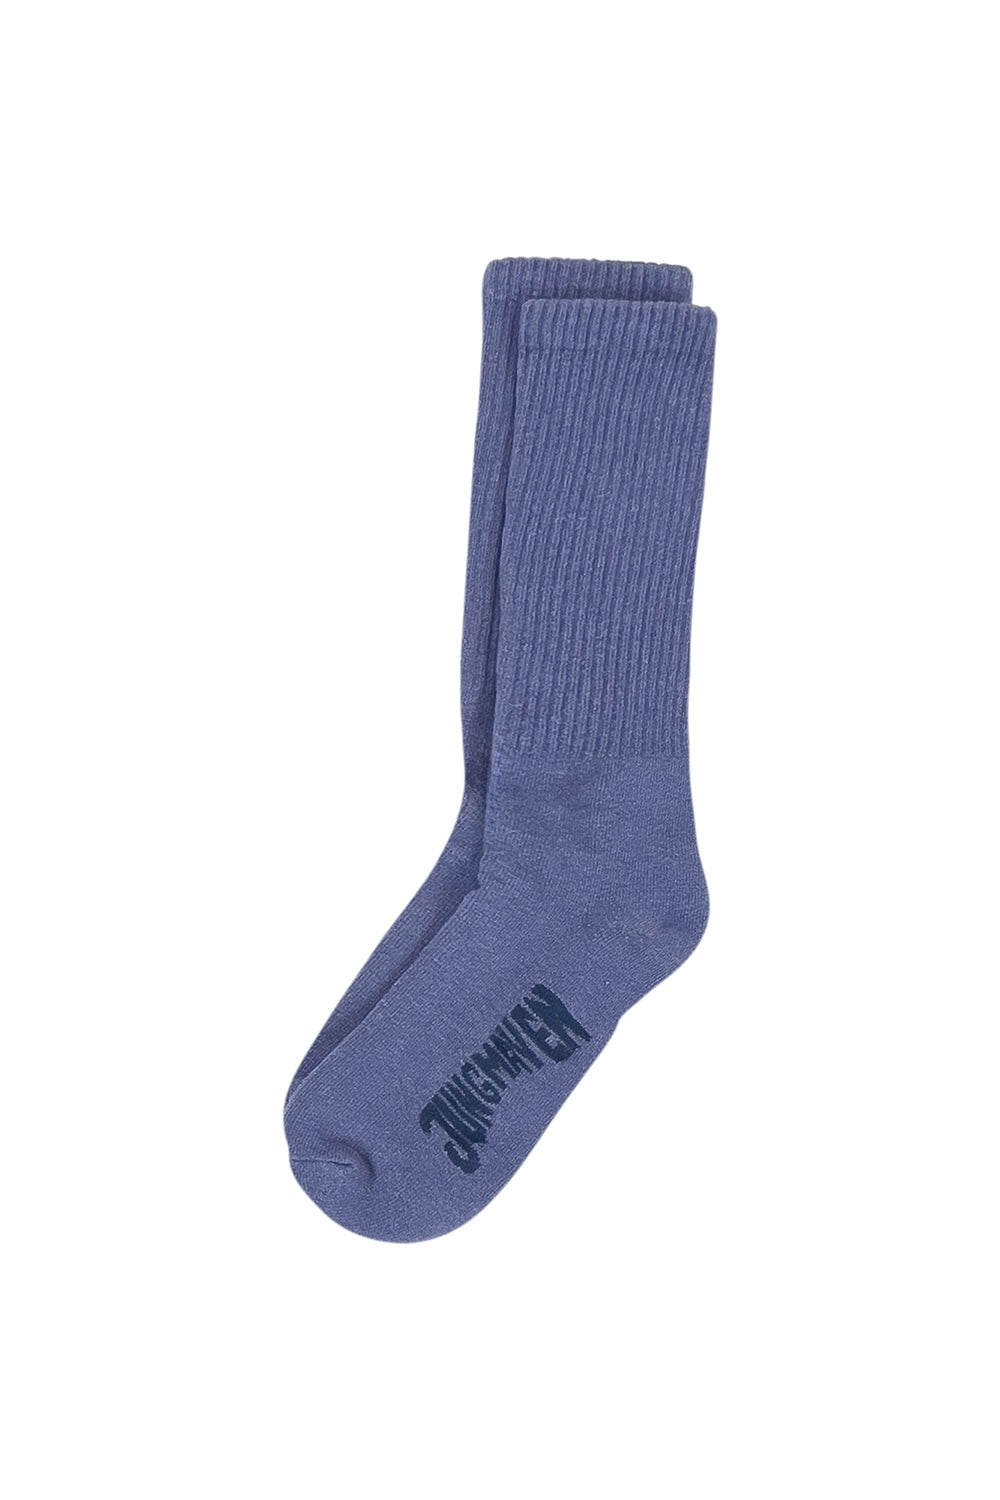 Hemp Wool Crew Socks | Jungmaven Hemp Clothing & Accessories / Color: Wisteria Blue